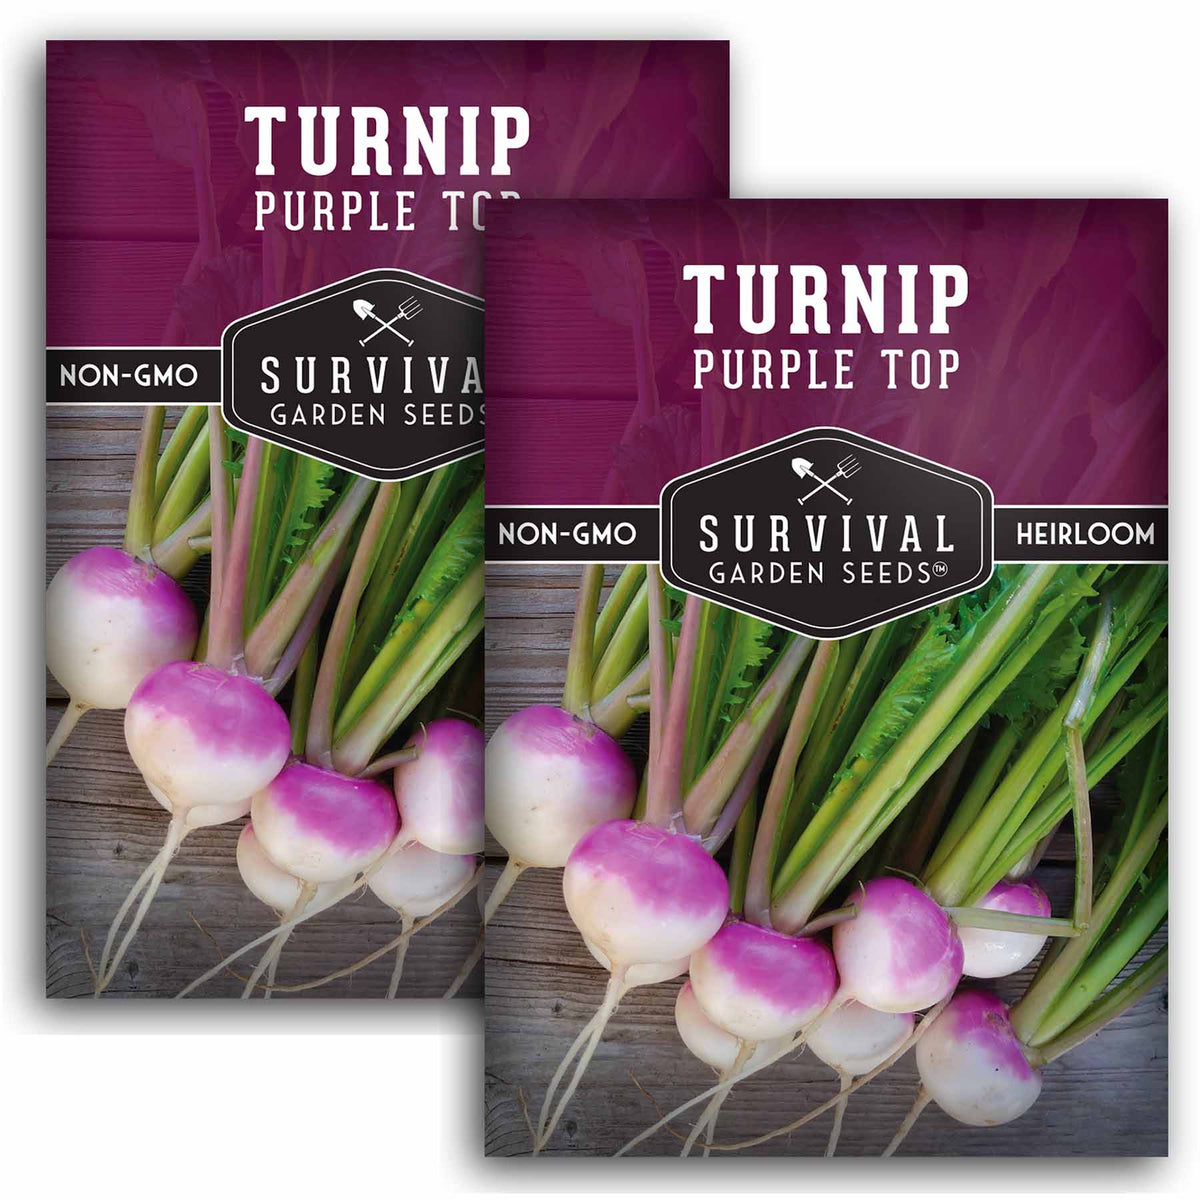 2 packets of Purple Top Turnip seeds